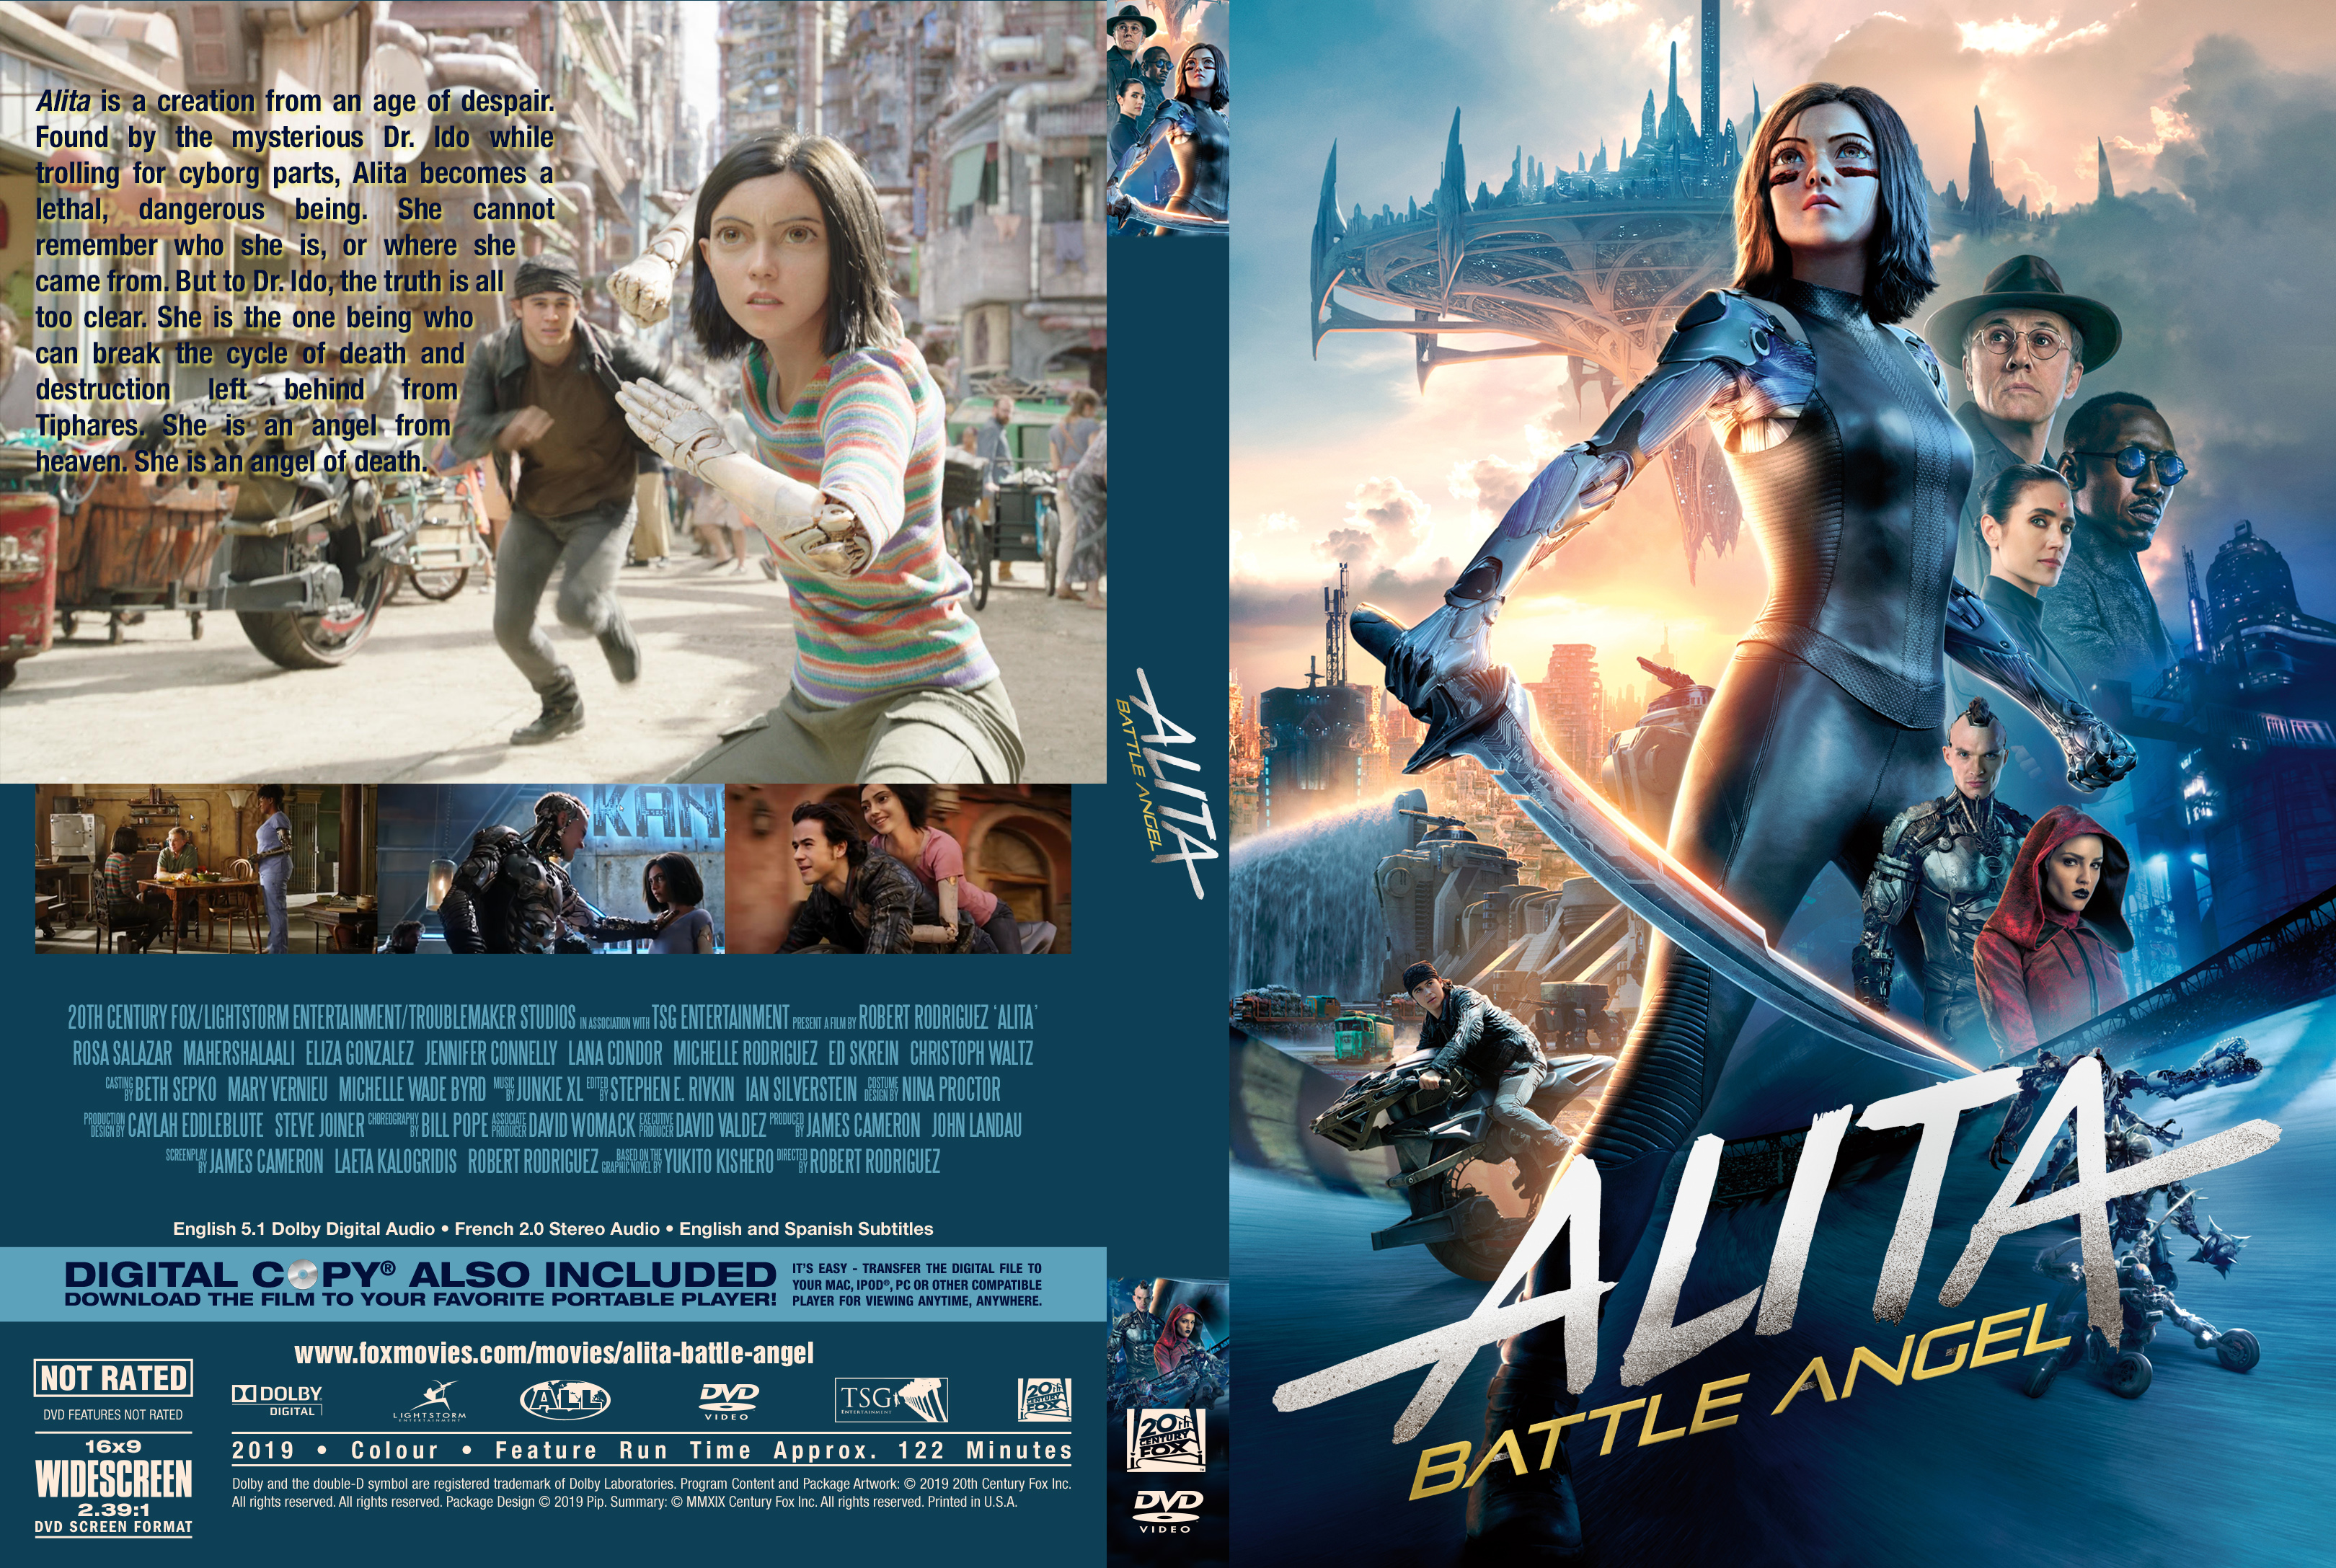 Alita battle angel 2 release date james cameron